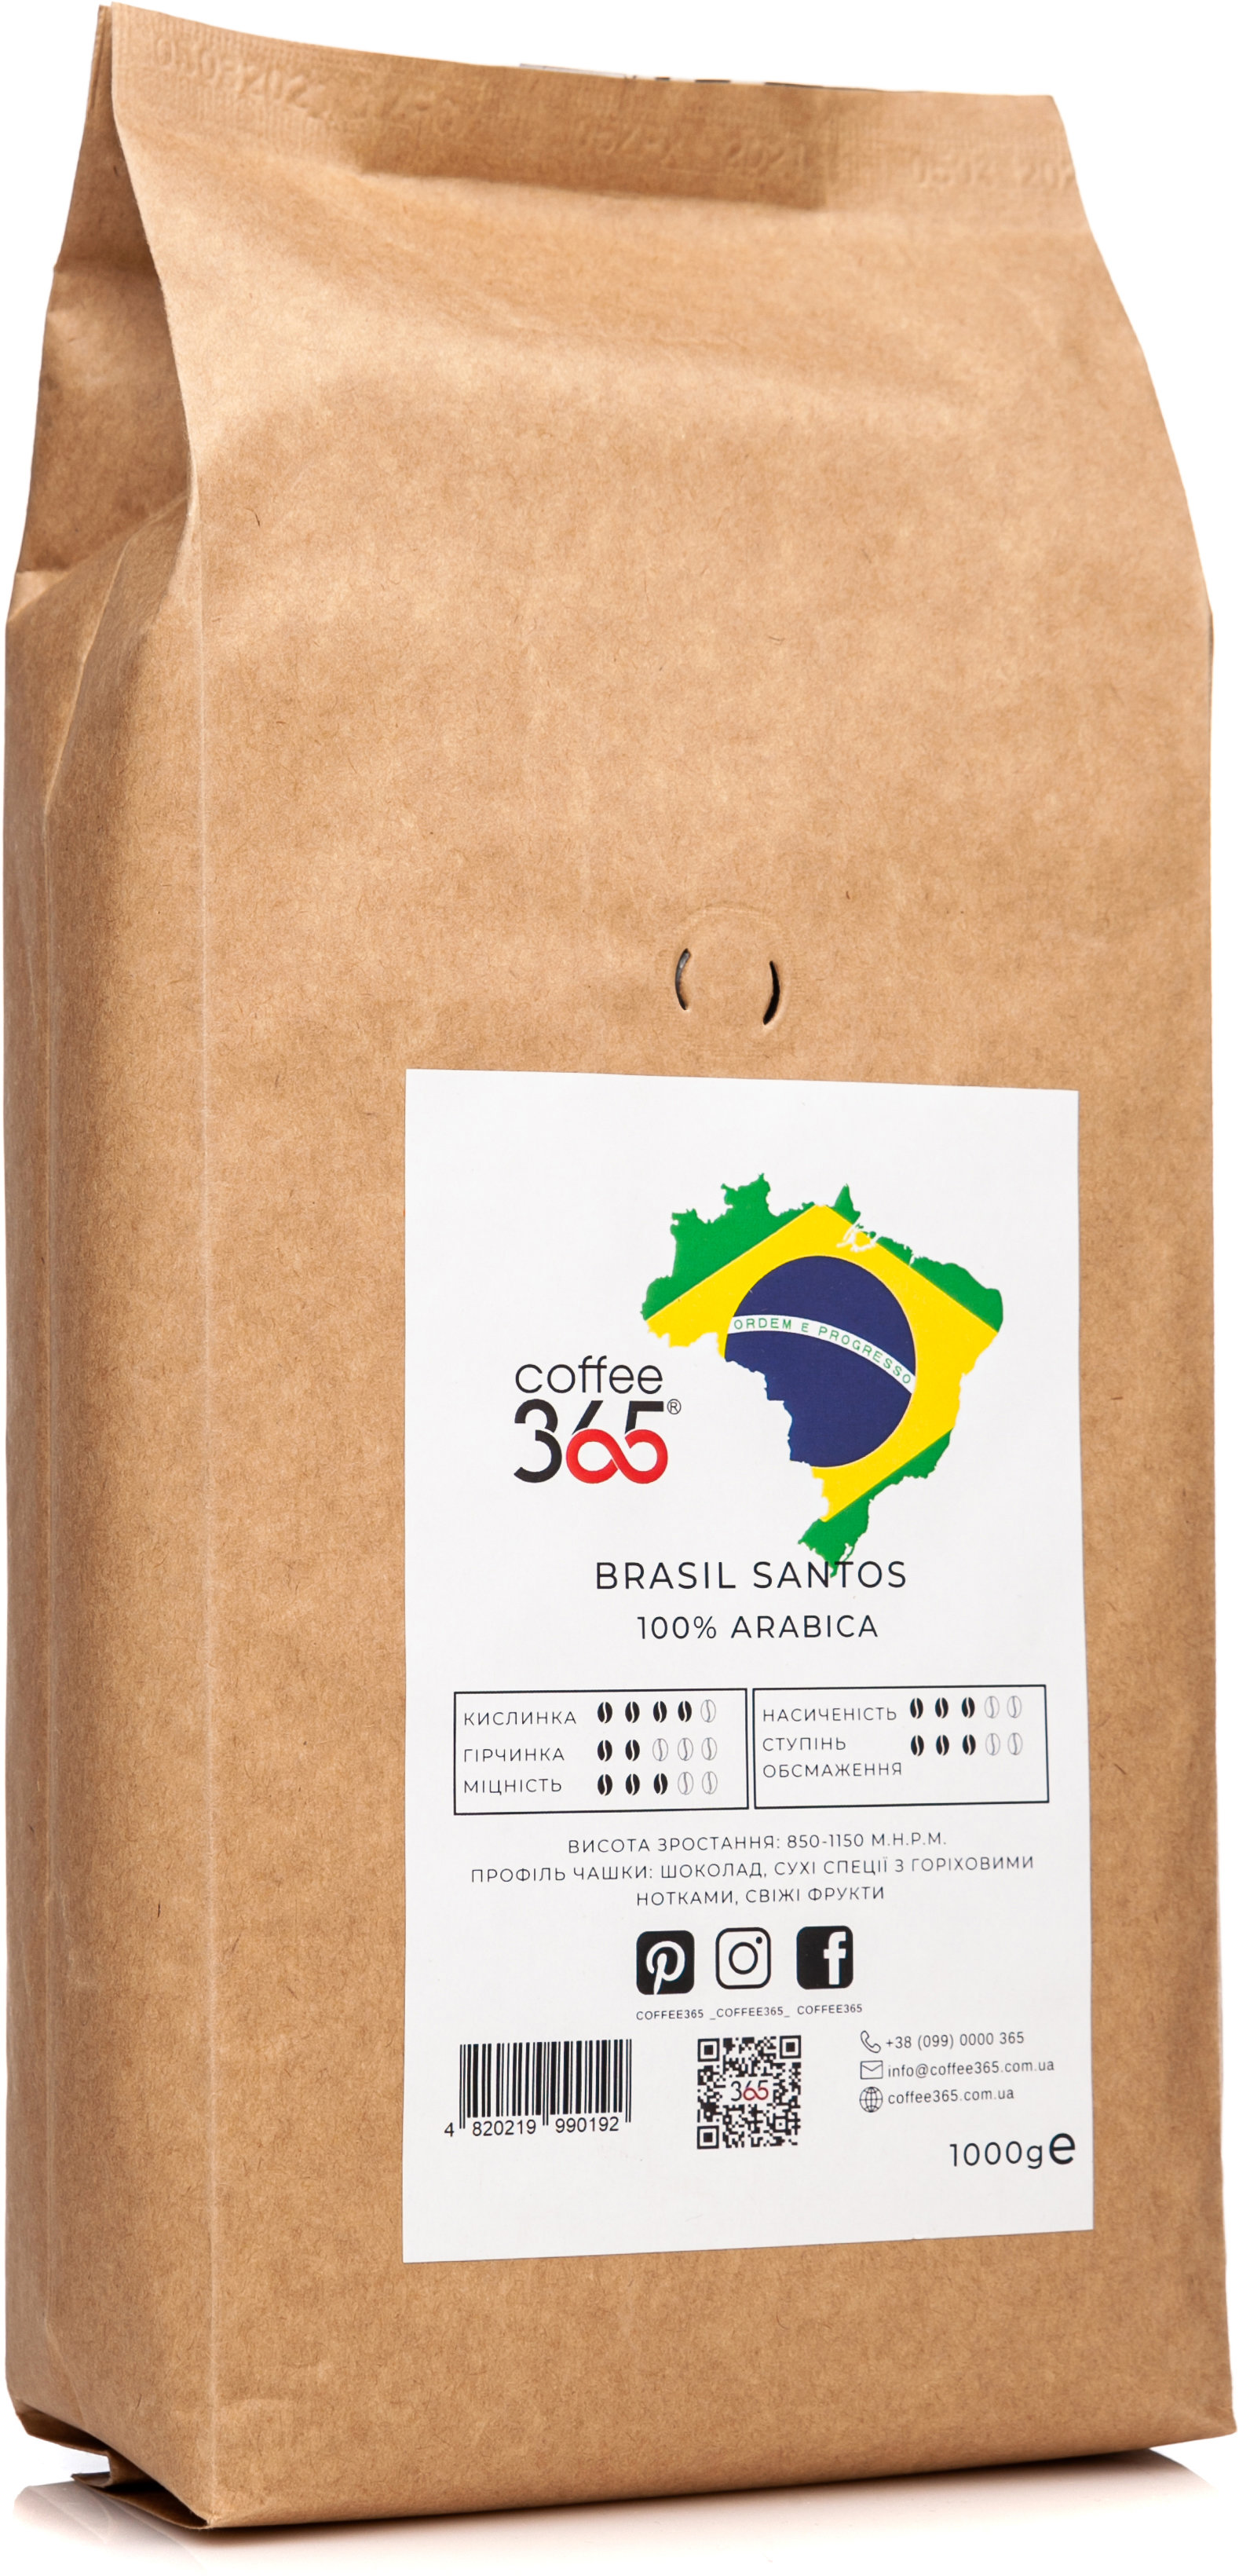 Акция на Кава в зернах Coffee365 Brasil Santos 1 кг (4820219990192) от Y.UA